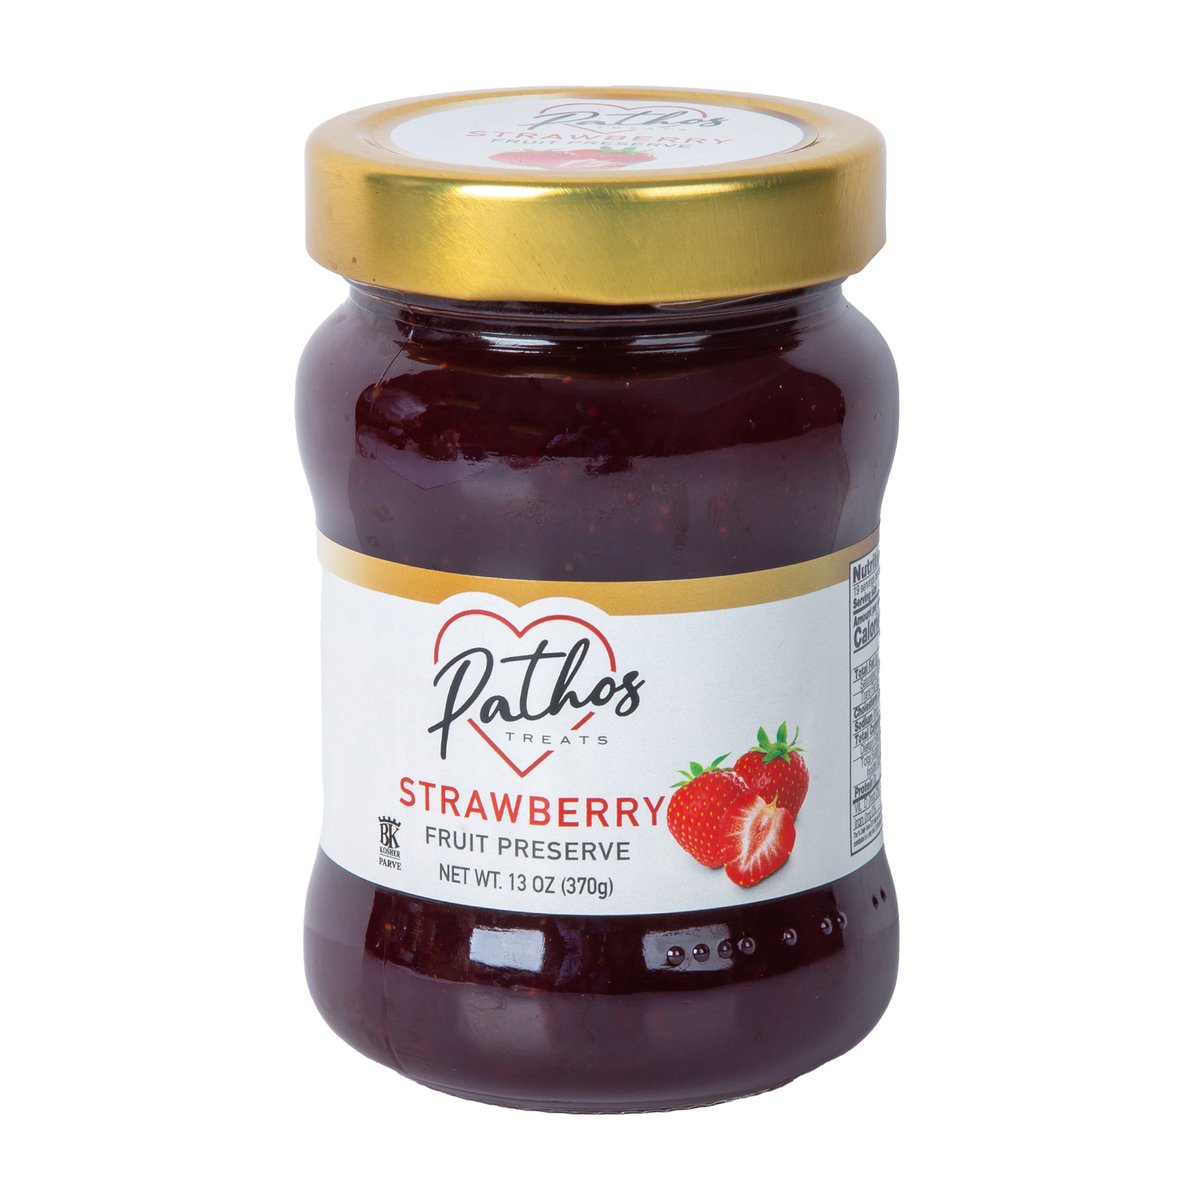 Pathos Treats Strawberry Fruit Jam 370 g